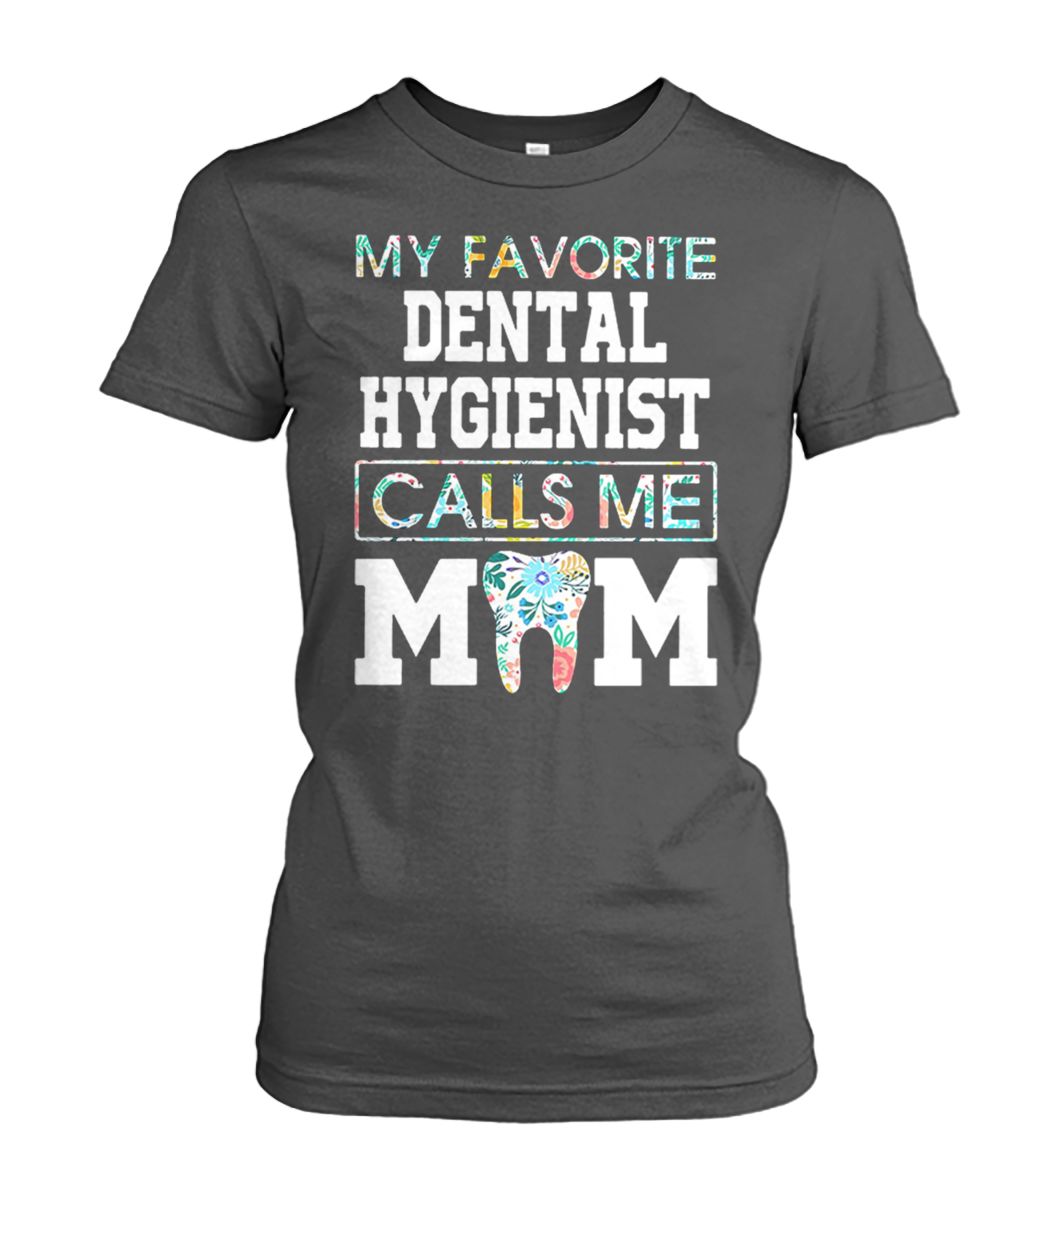 My favorite dental hygienist calls me mom women's crew tee